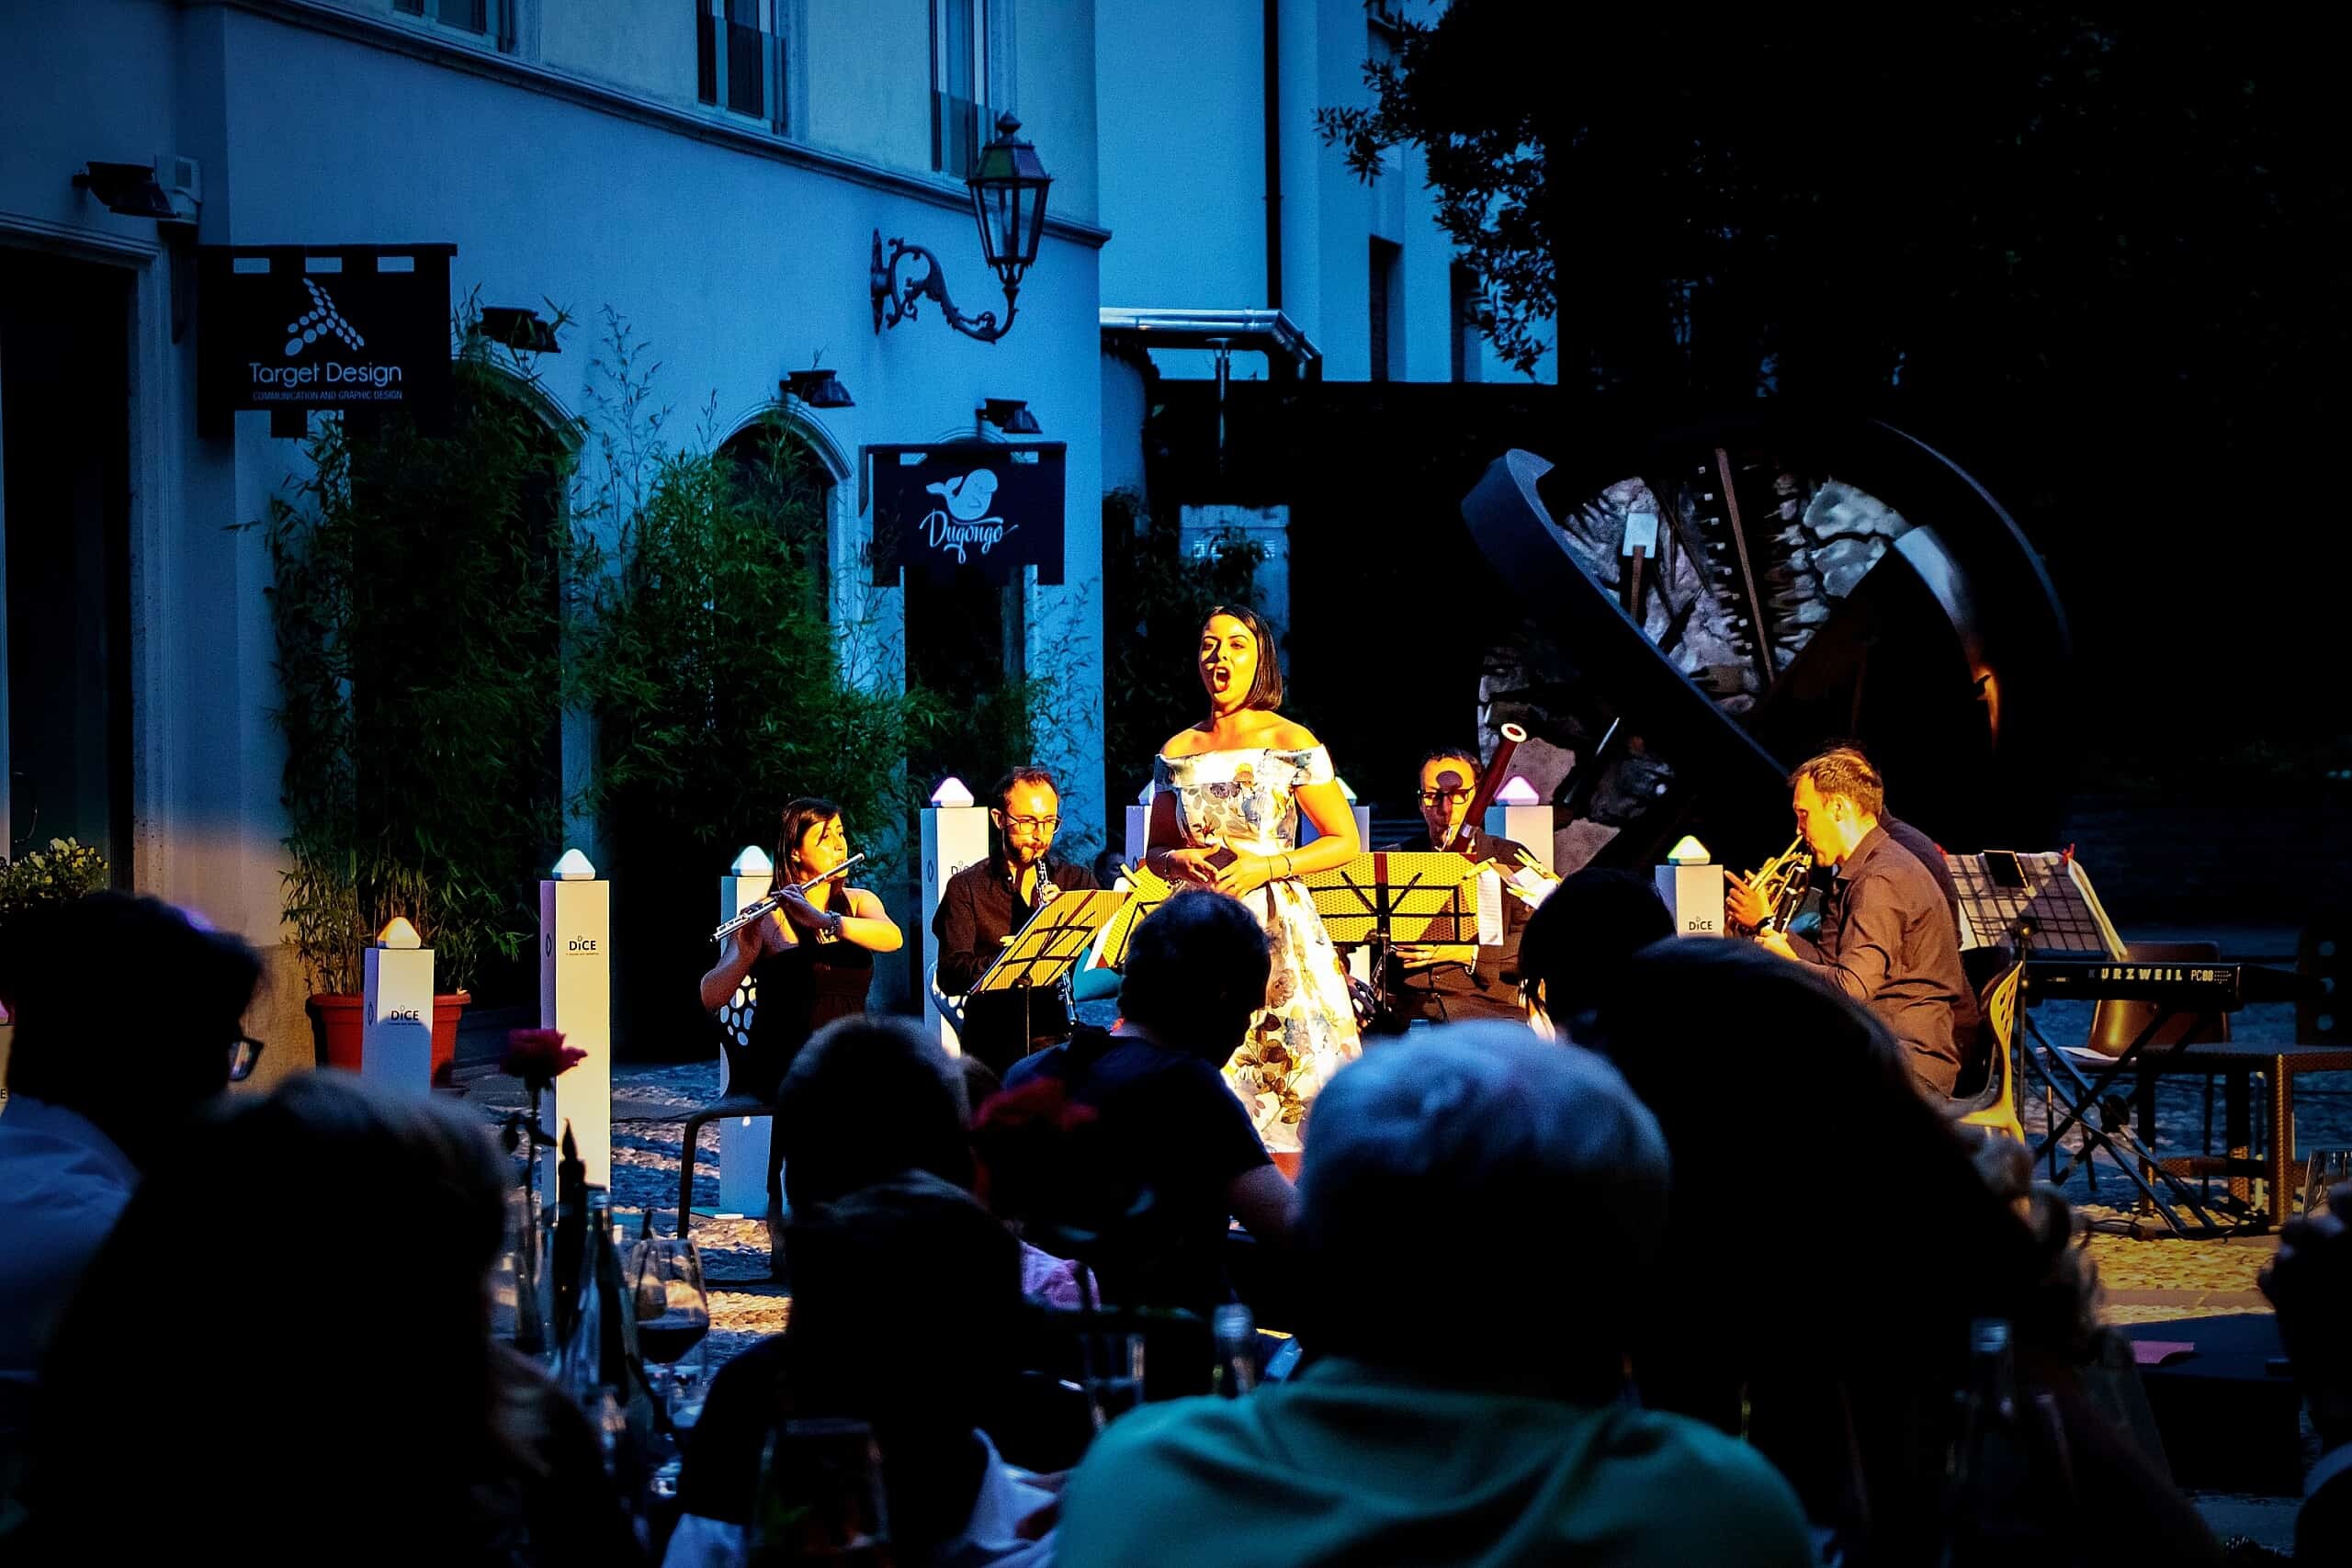 Donizetti Night in Bergamo